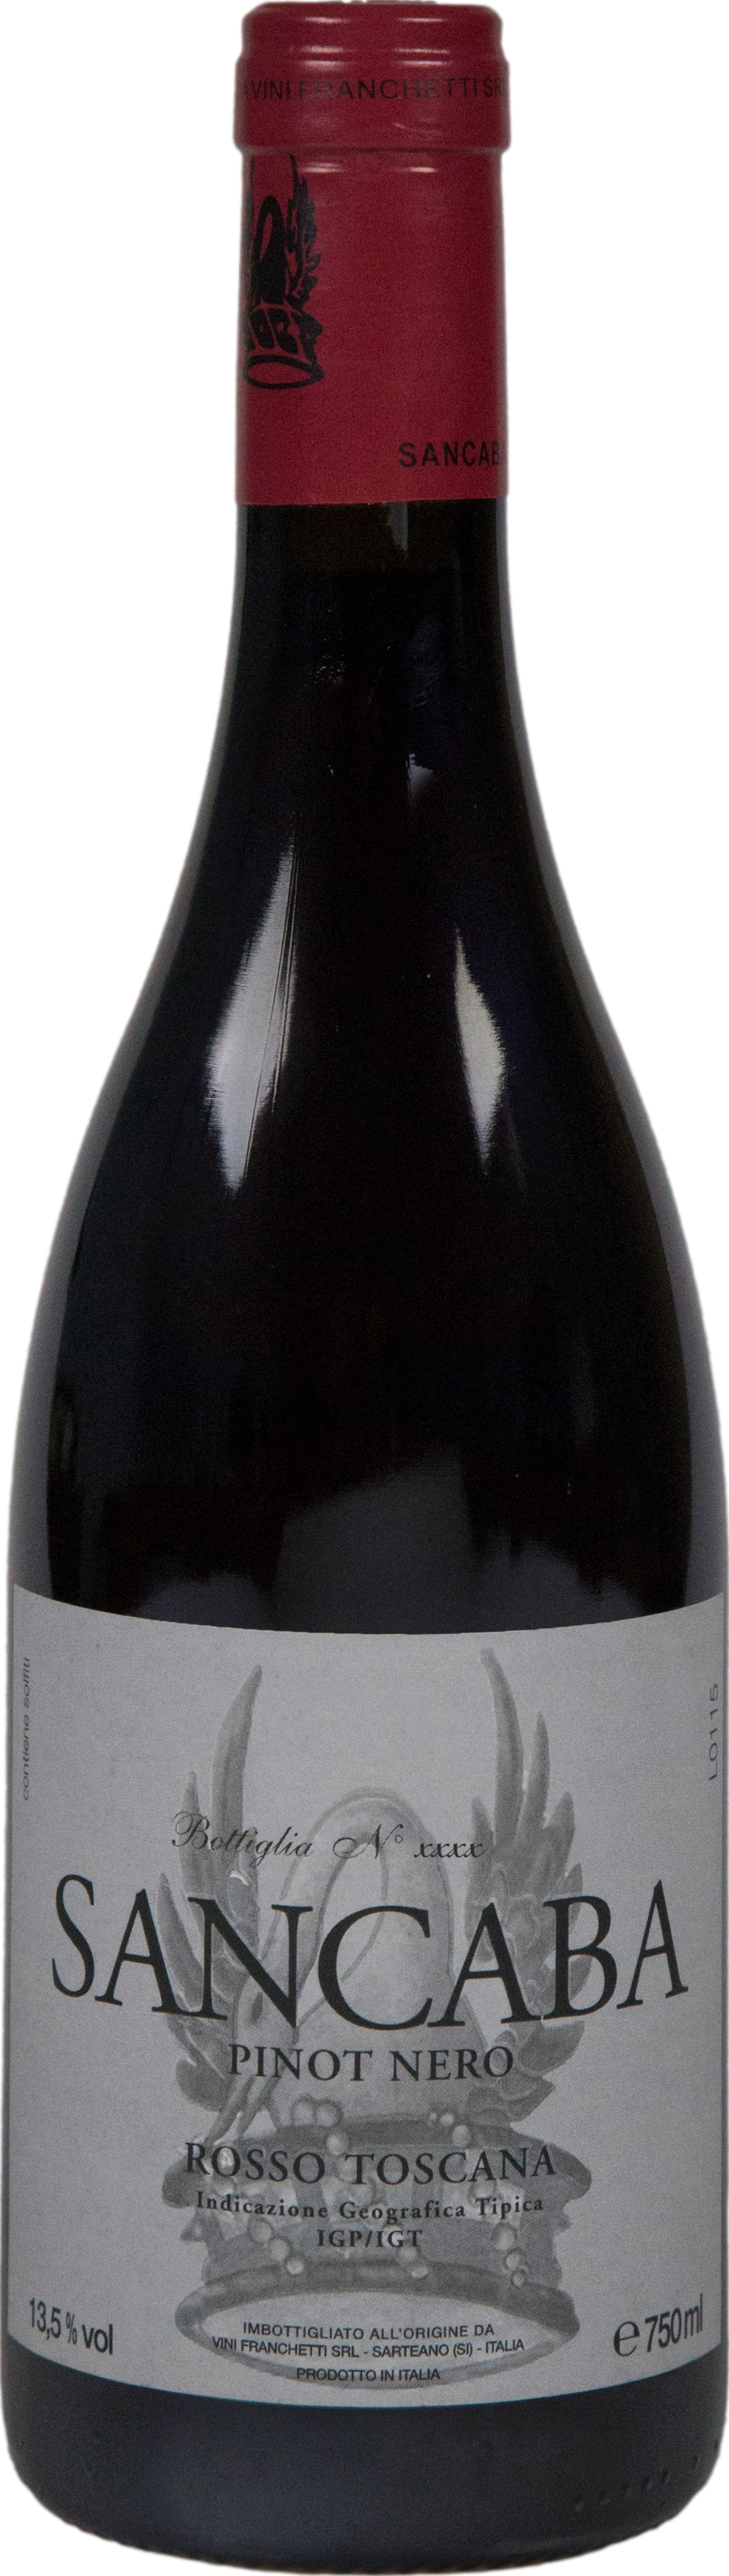 Product image of Vini Franchetti Sancaba Pinot Nero 2019 from 8wines